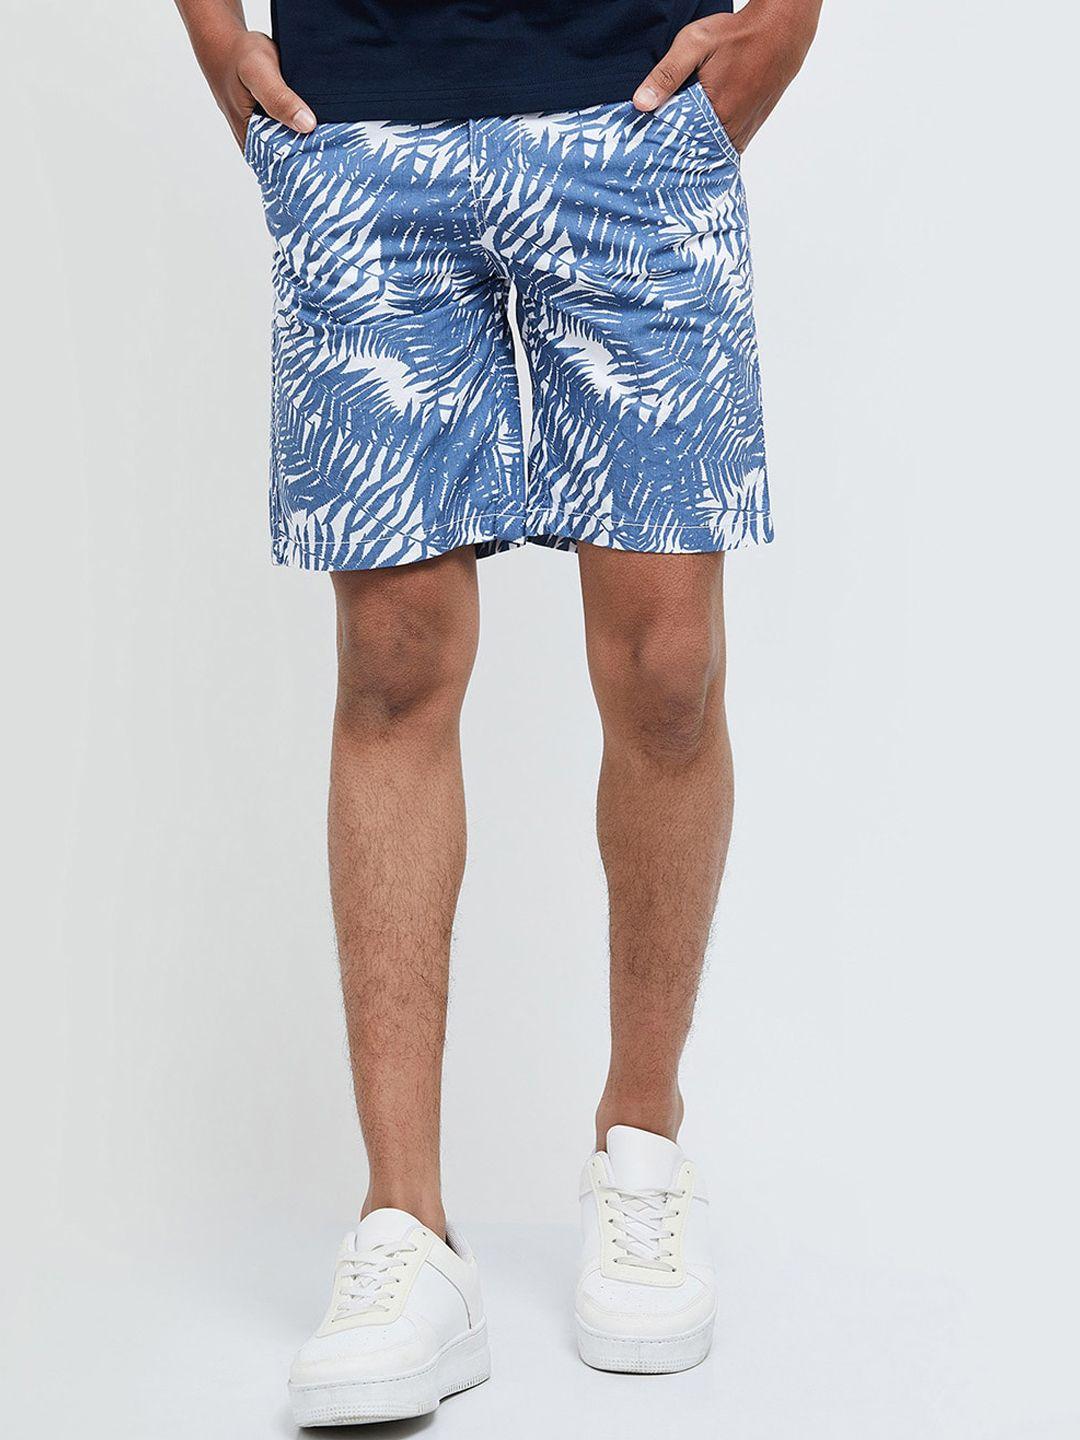 max-boys-white-floral-printed-shorts